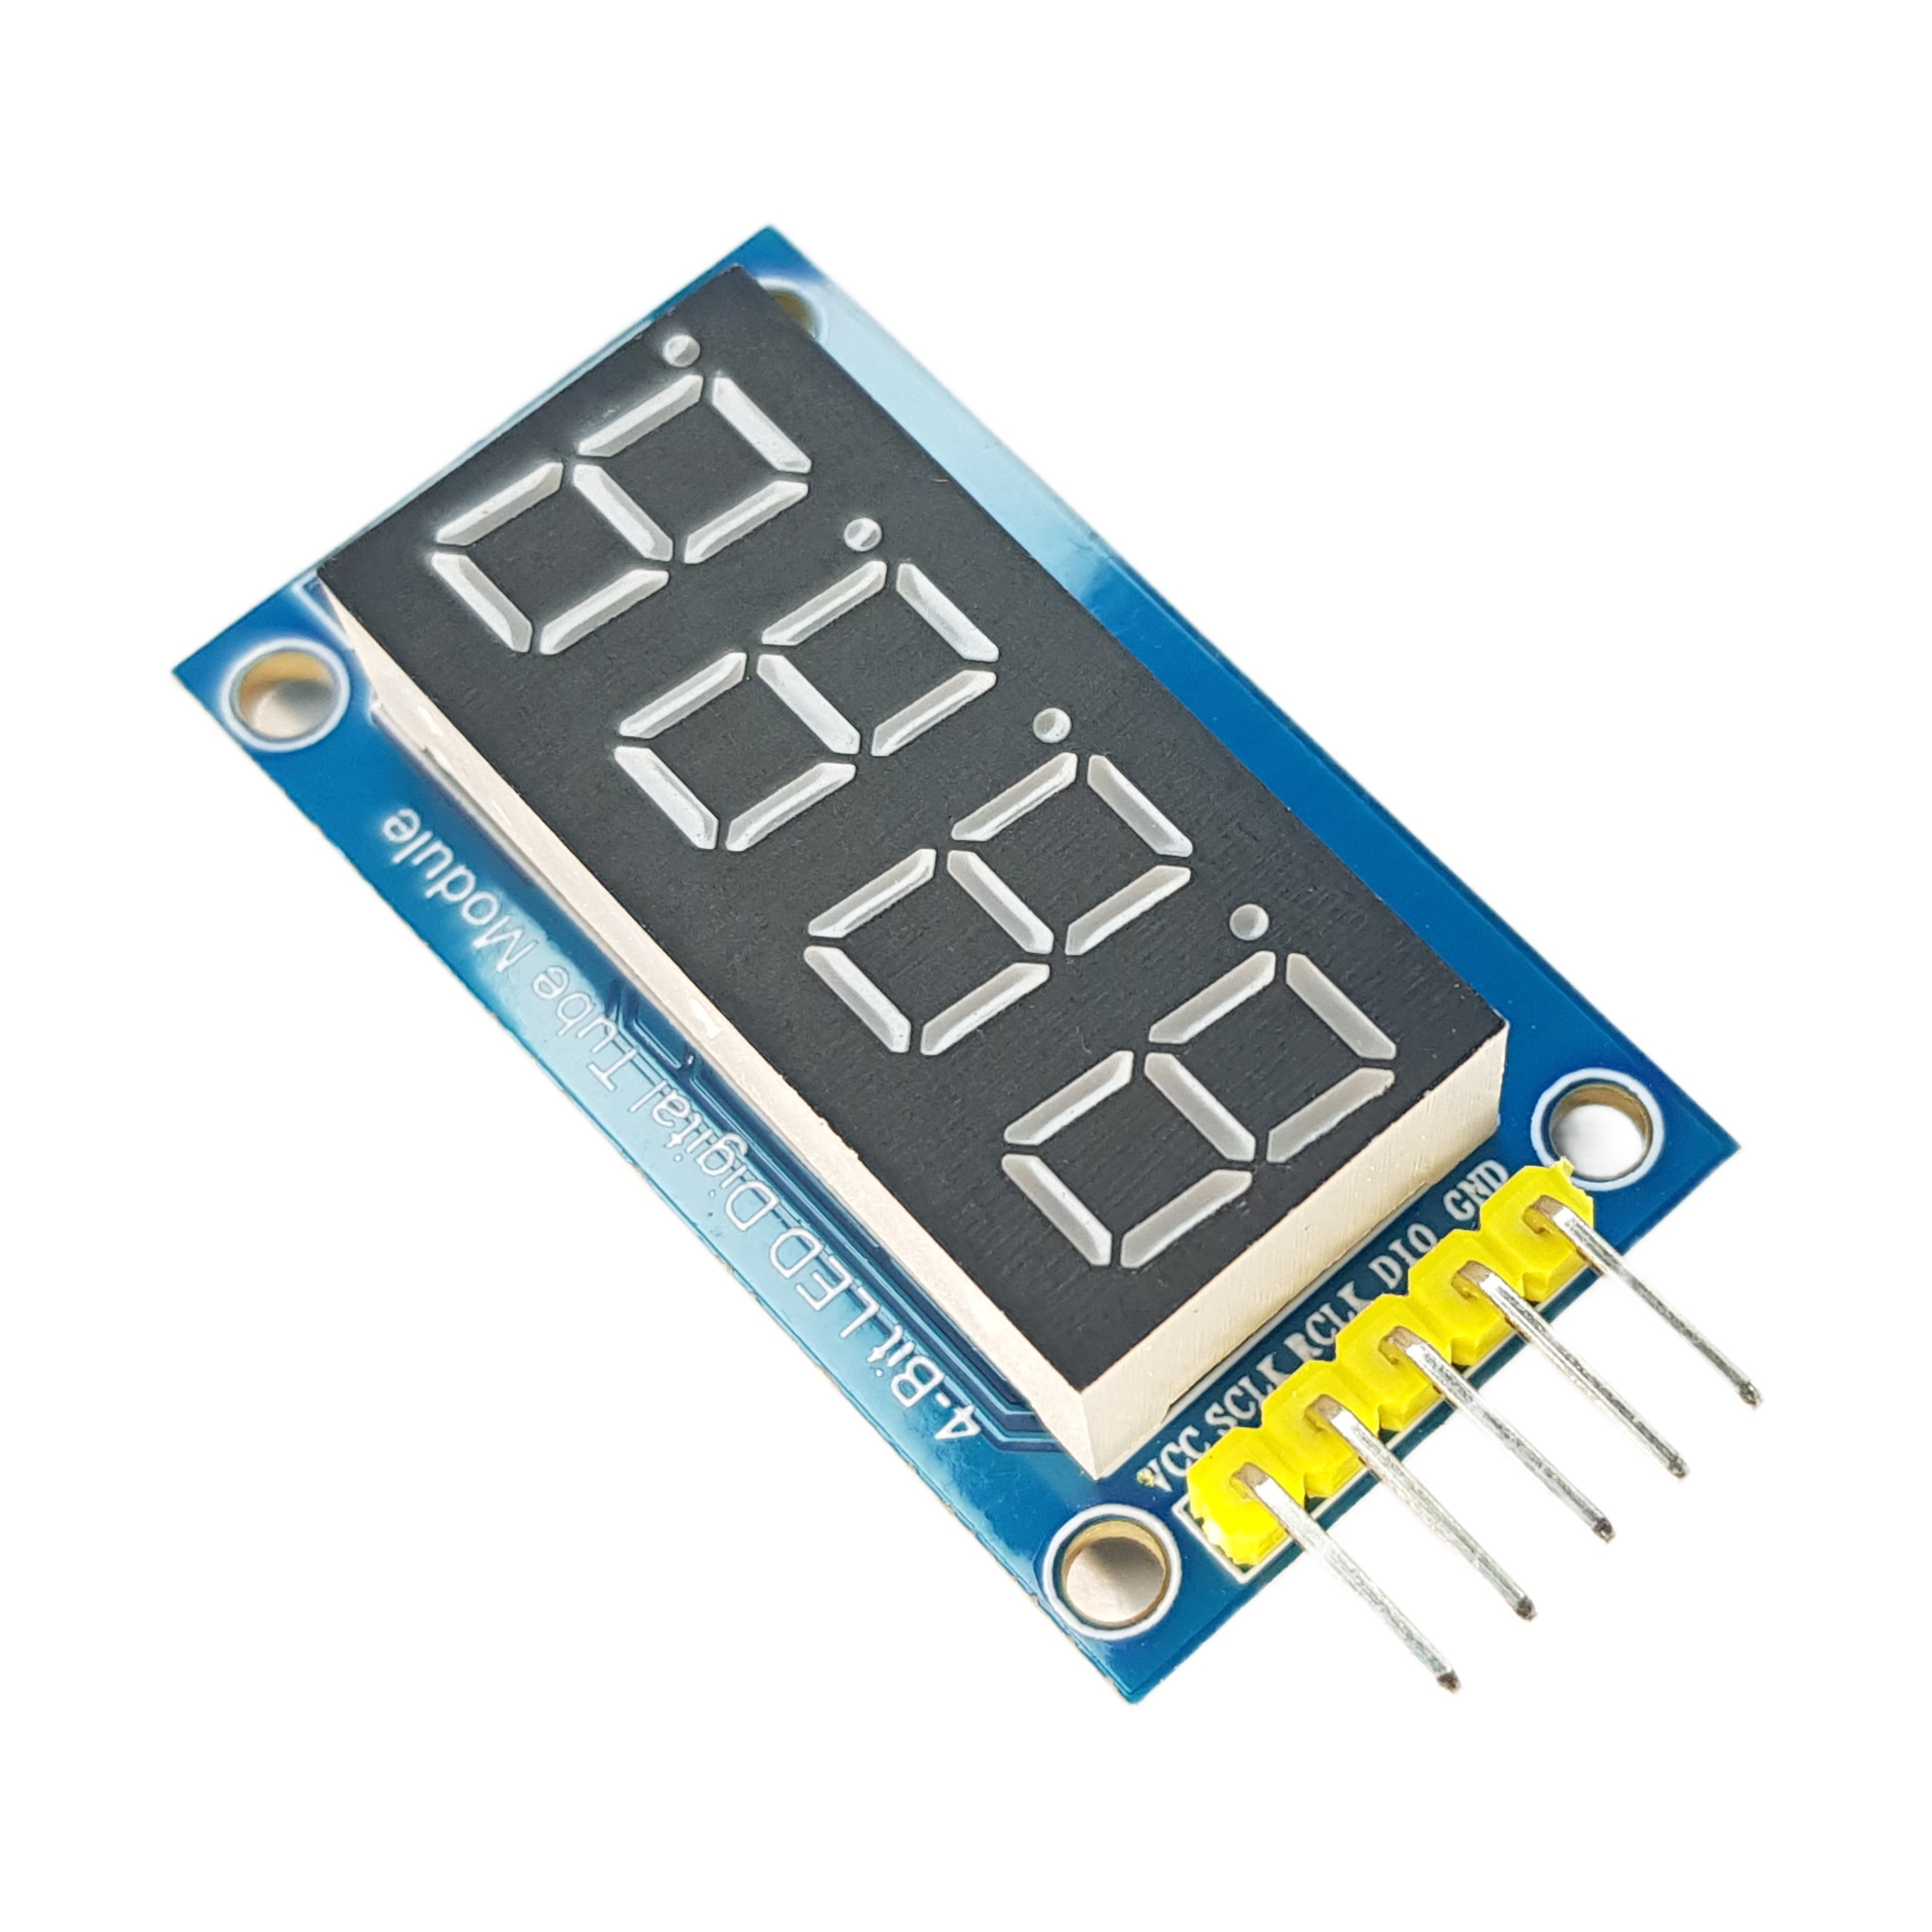 4-digit 7-segment Display LED 74HC595 driver with 4 dots for Arduino, ESP32, ESP8266, Raspberry Pi